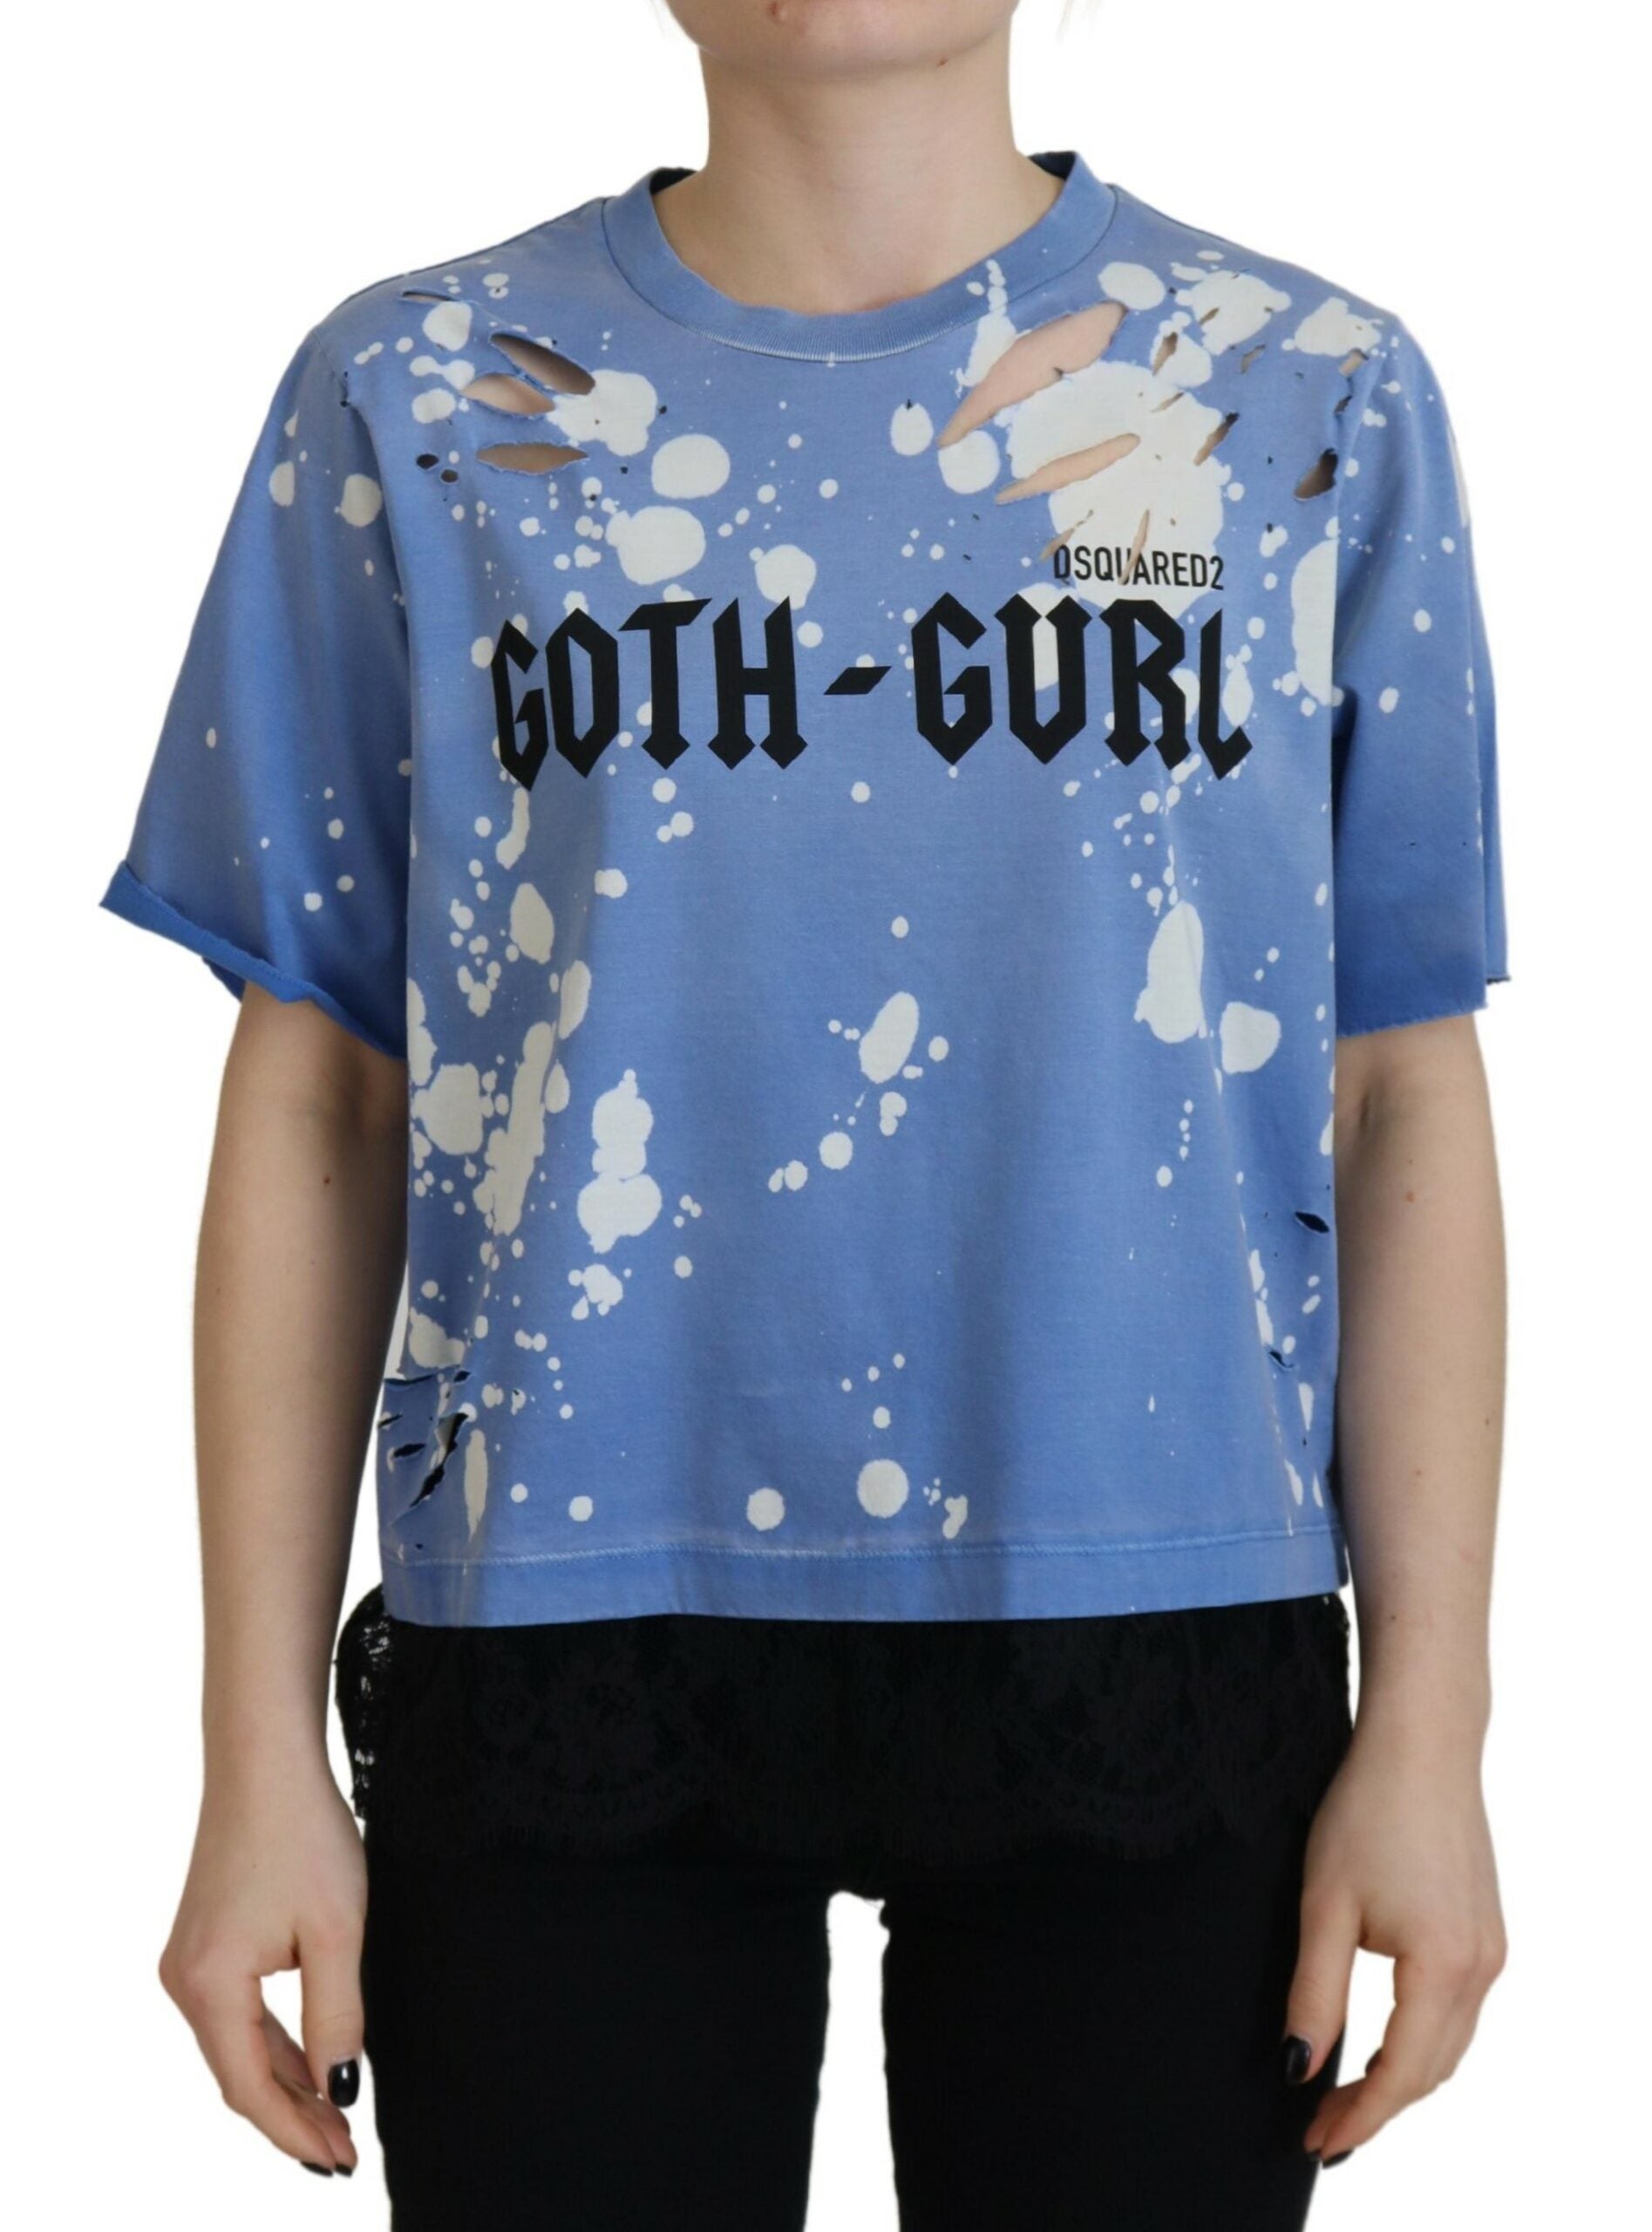 Dsquared² Blue Goth Gurl Print Black Lace Cotton Tee Women's T-shirt